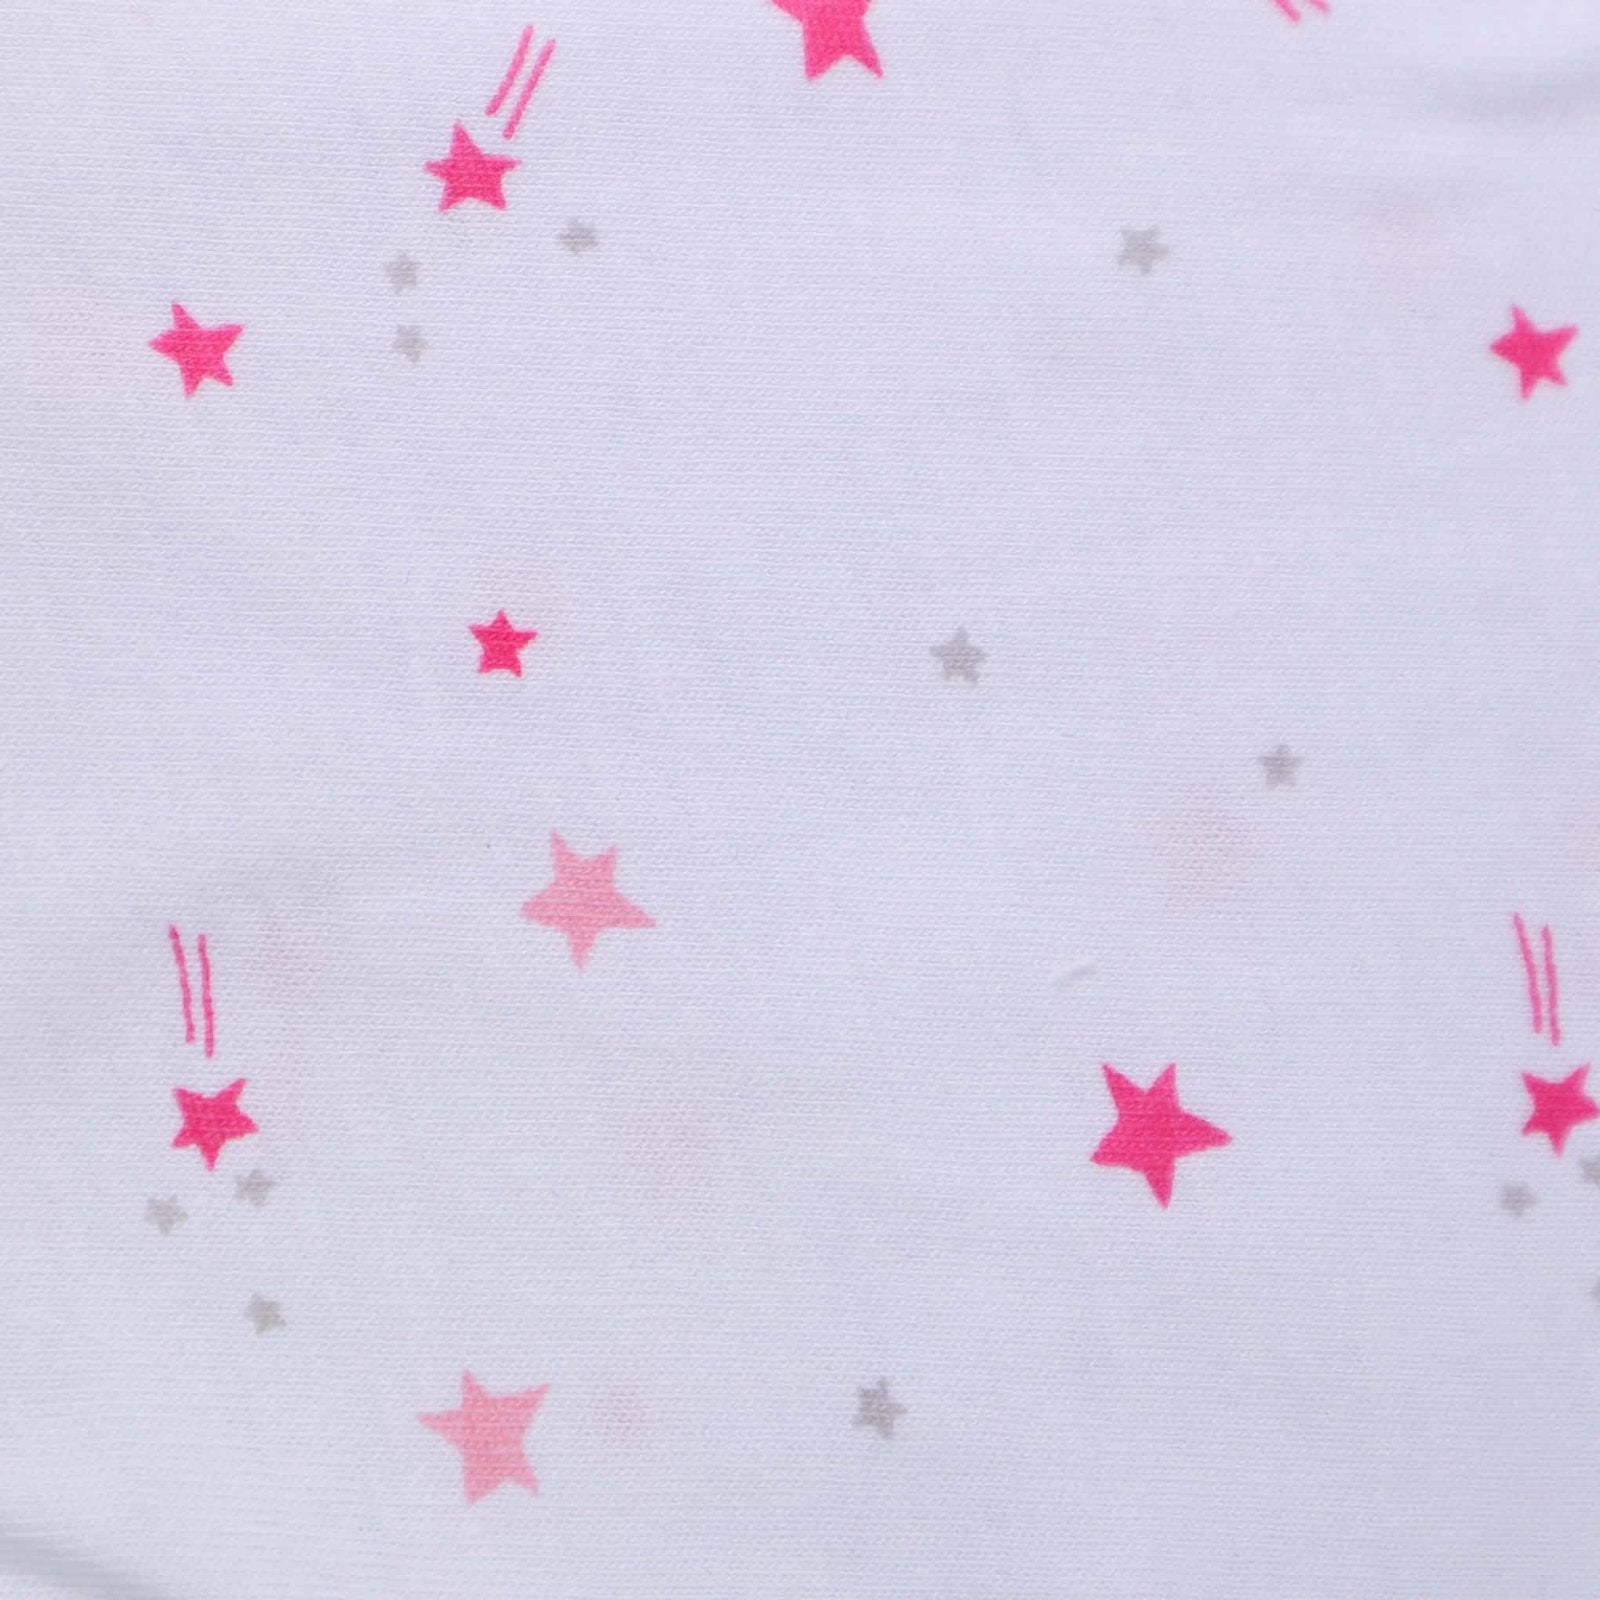 Pajama Set of 2 Pink Star Printed by Little Darling